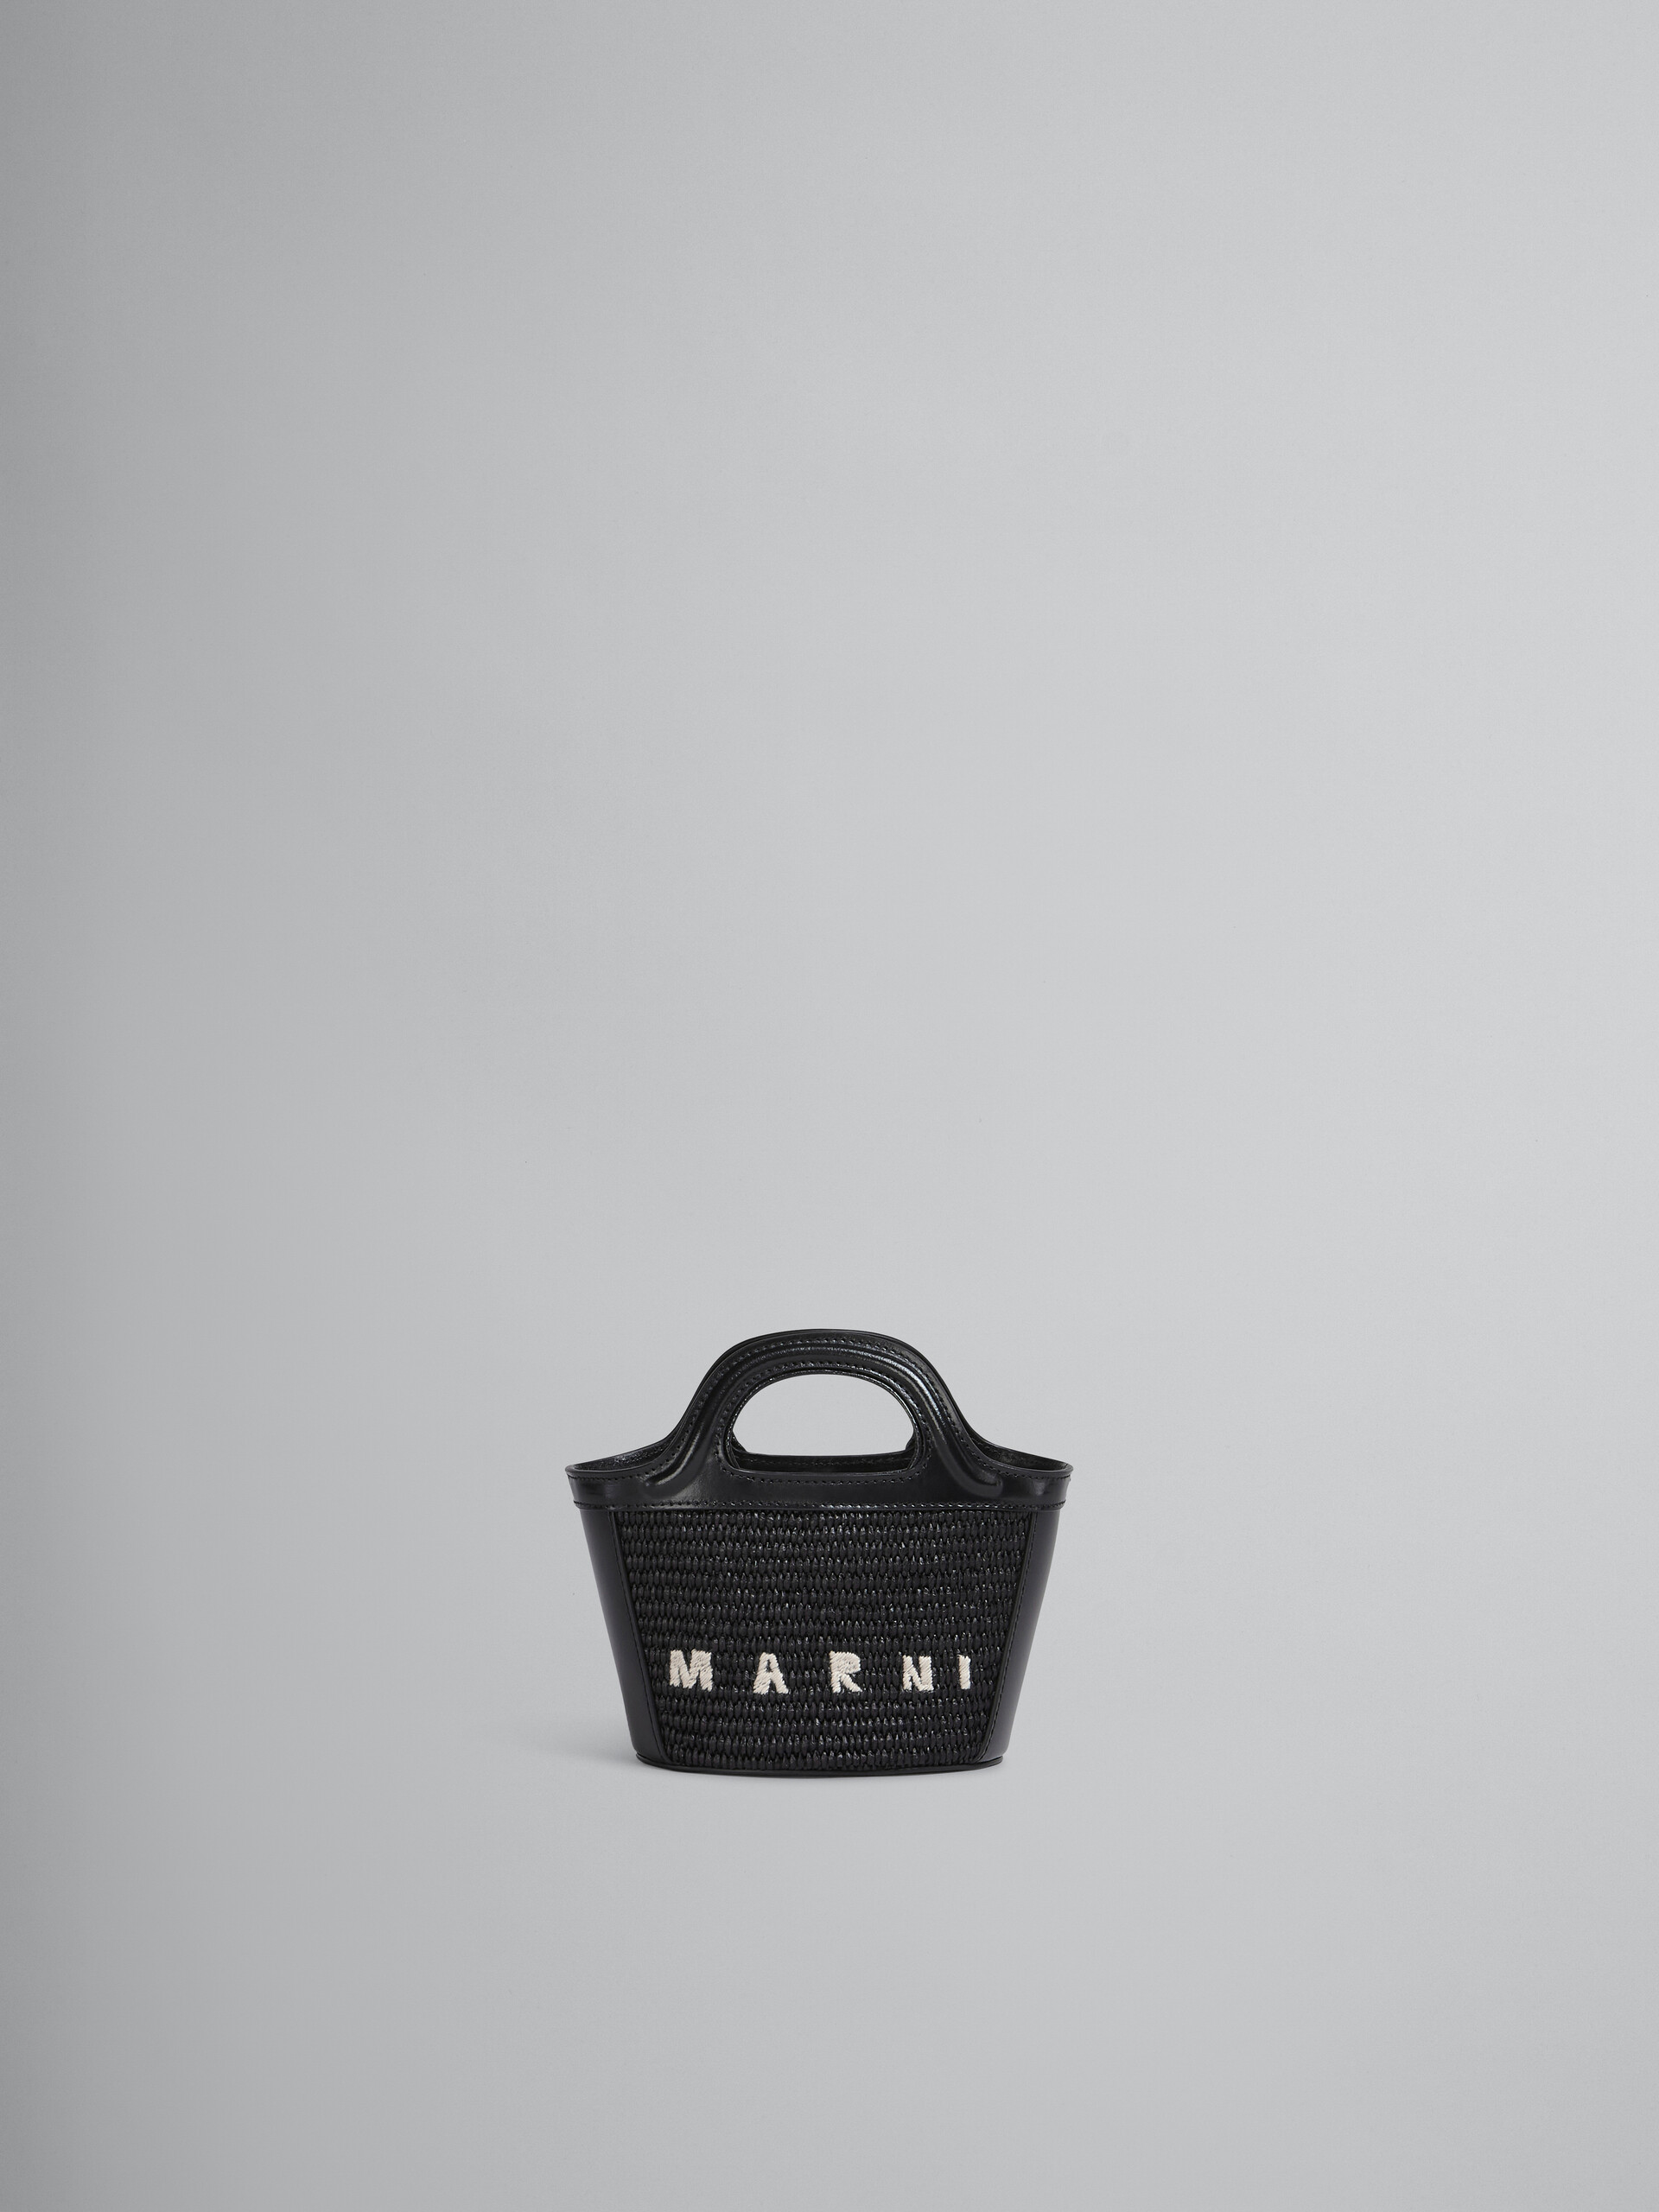 TROPICALIA micro bag in black leather and raffia - Handbags - Image 1